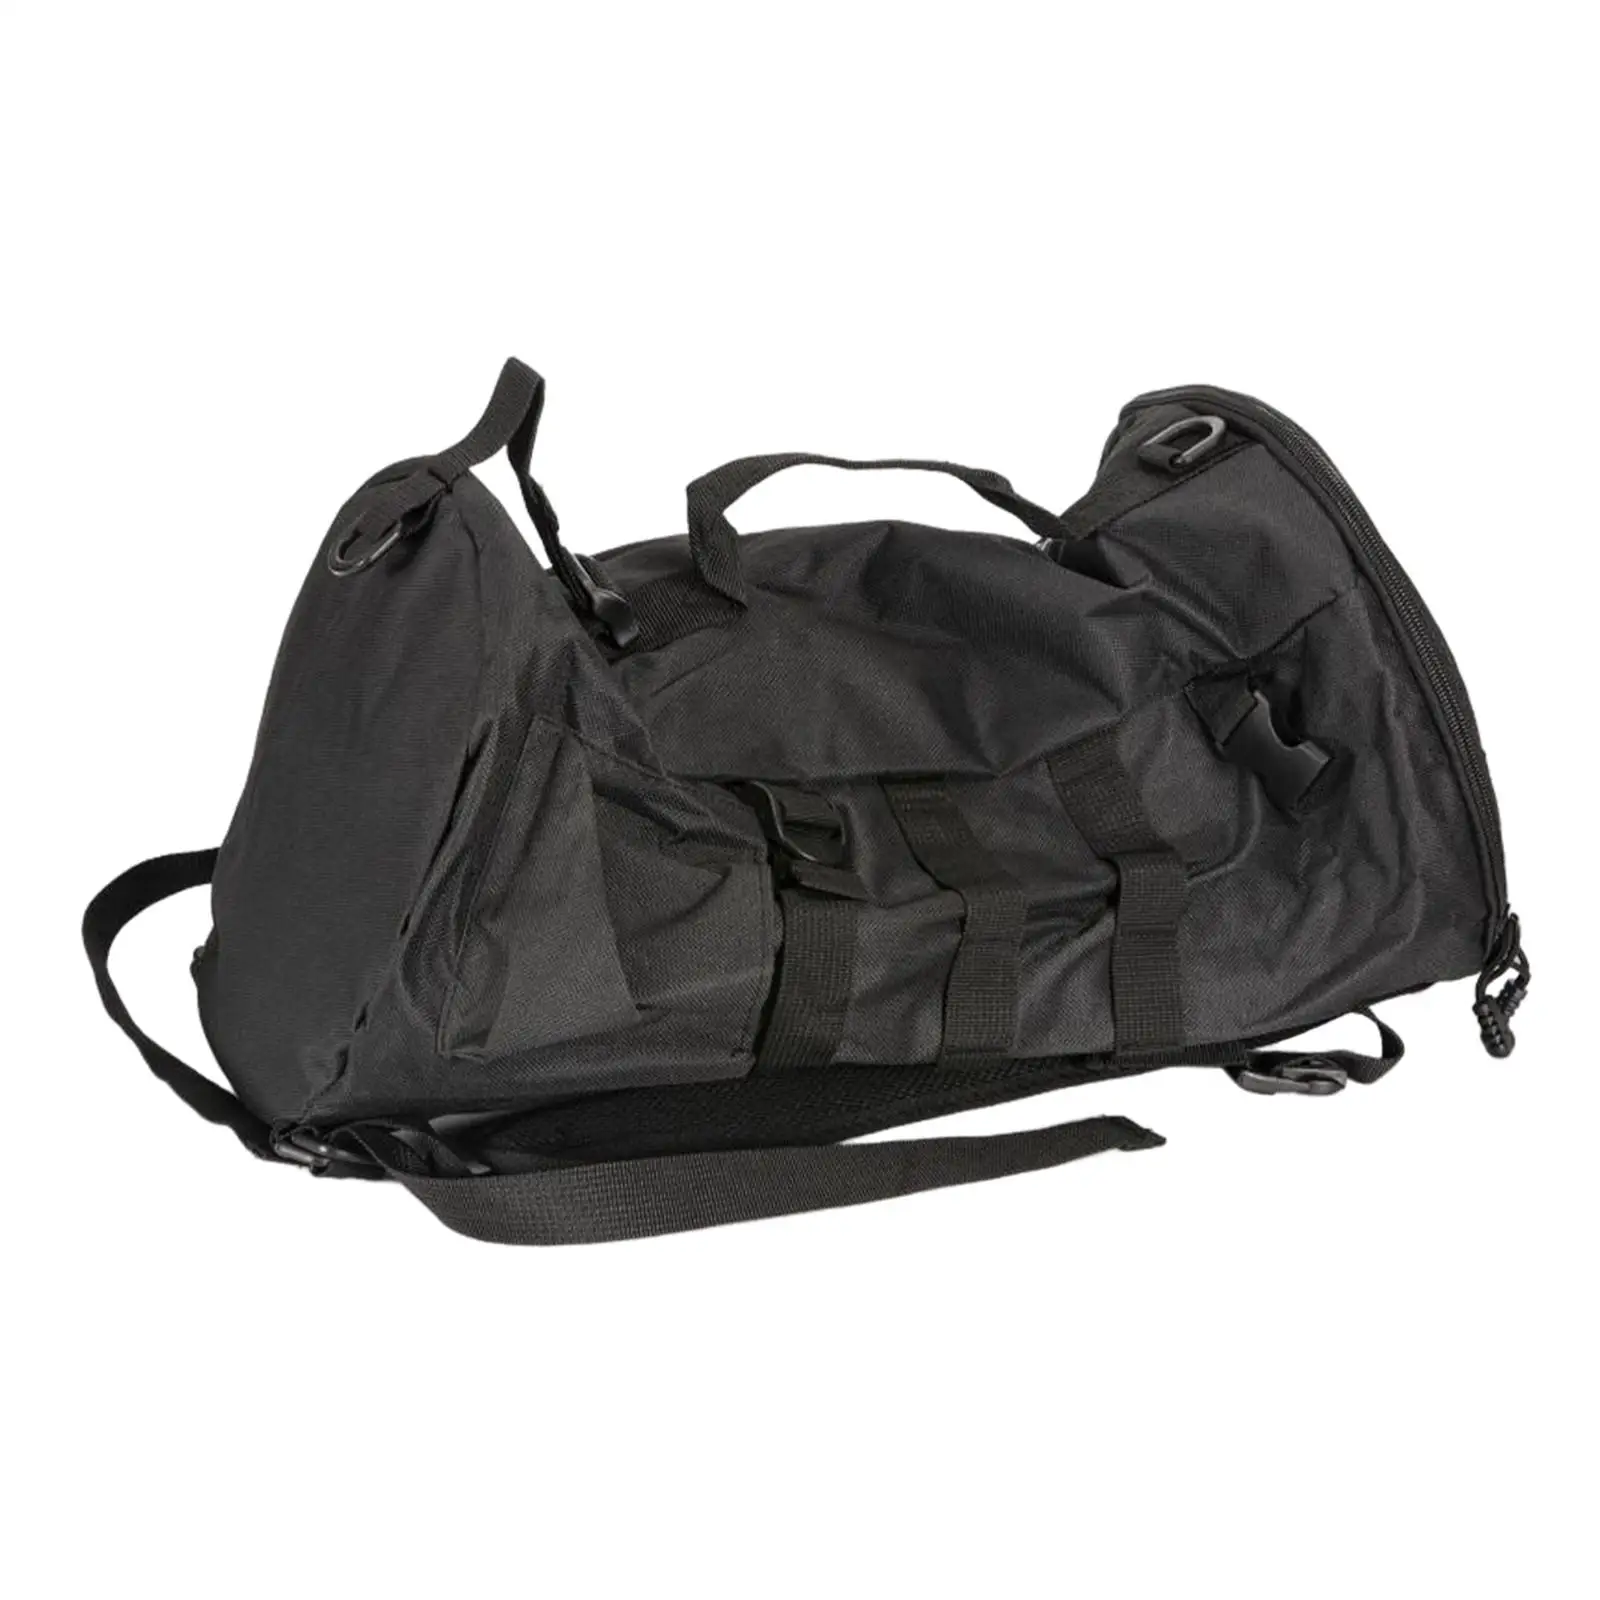 Fishing Tackle Bag Shoulder Bag Water Resistant Portable Fittings Handbag